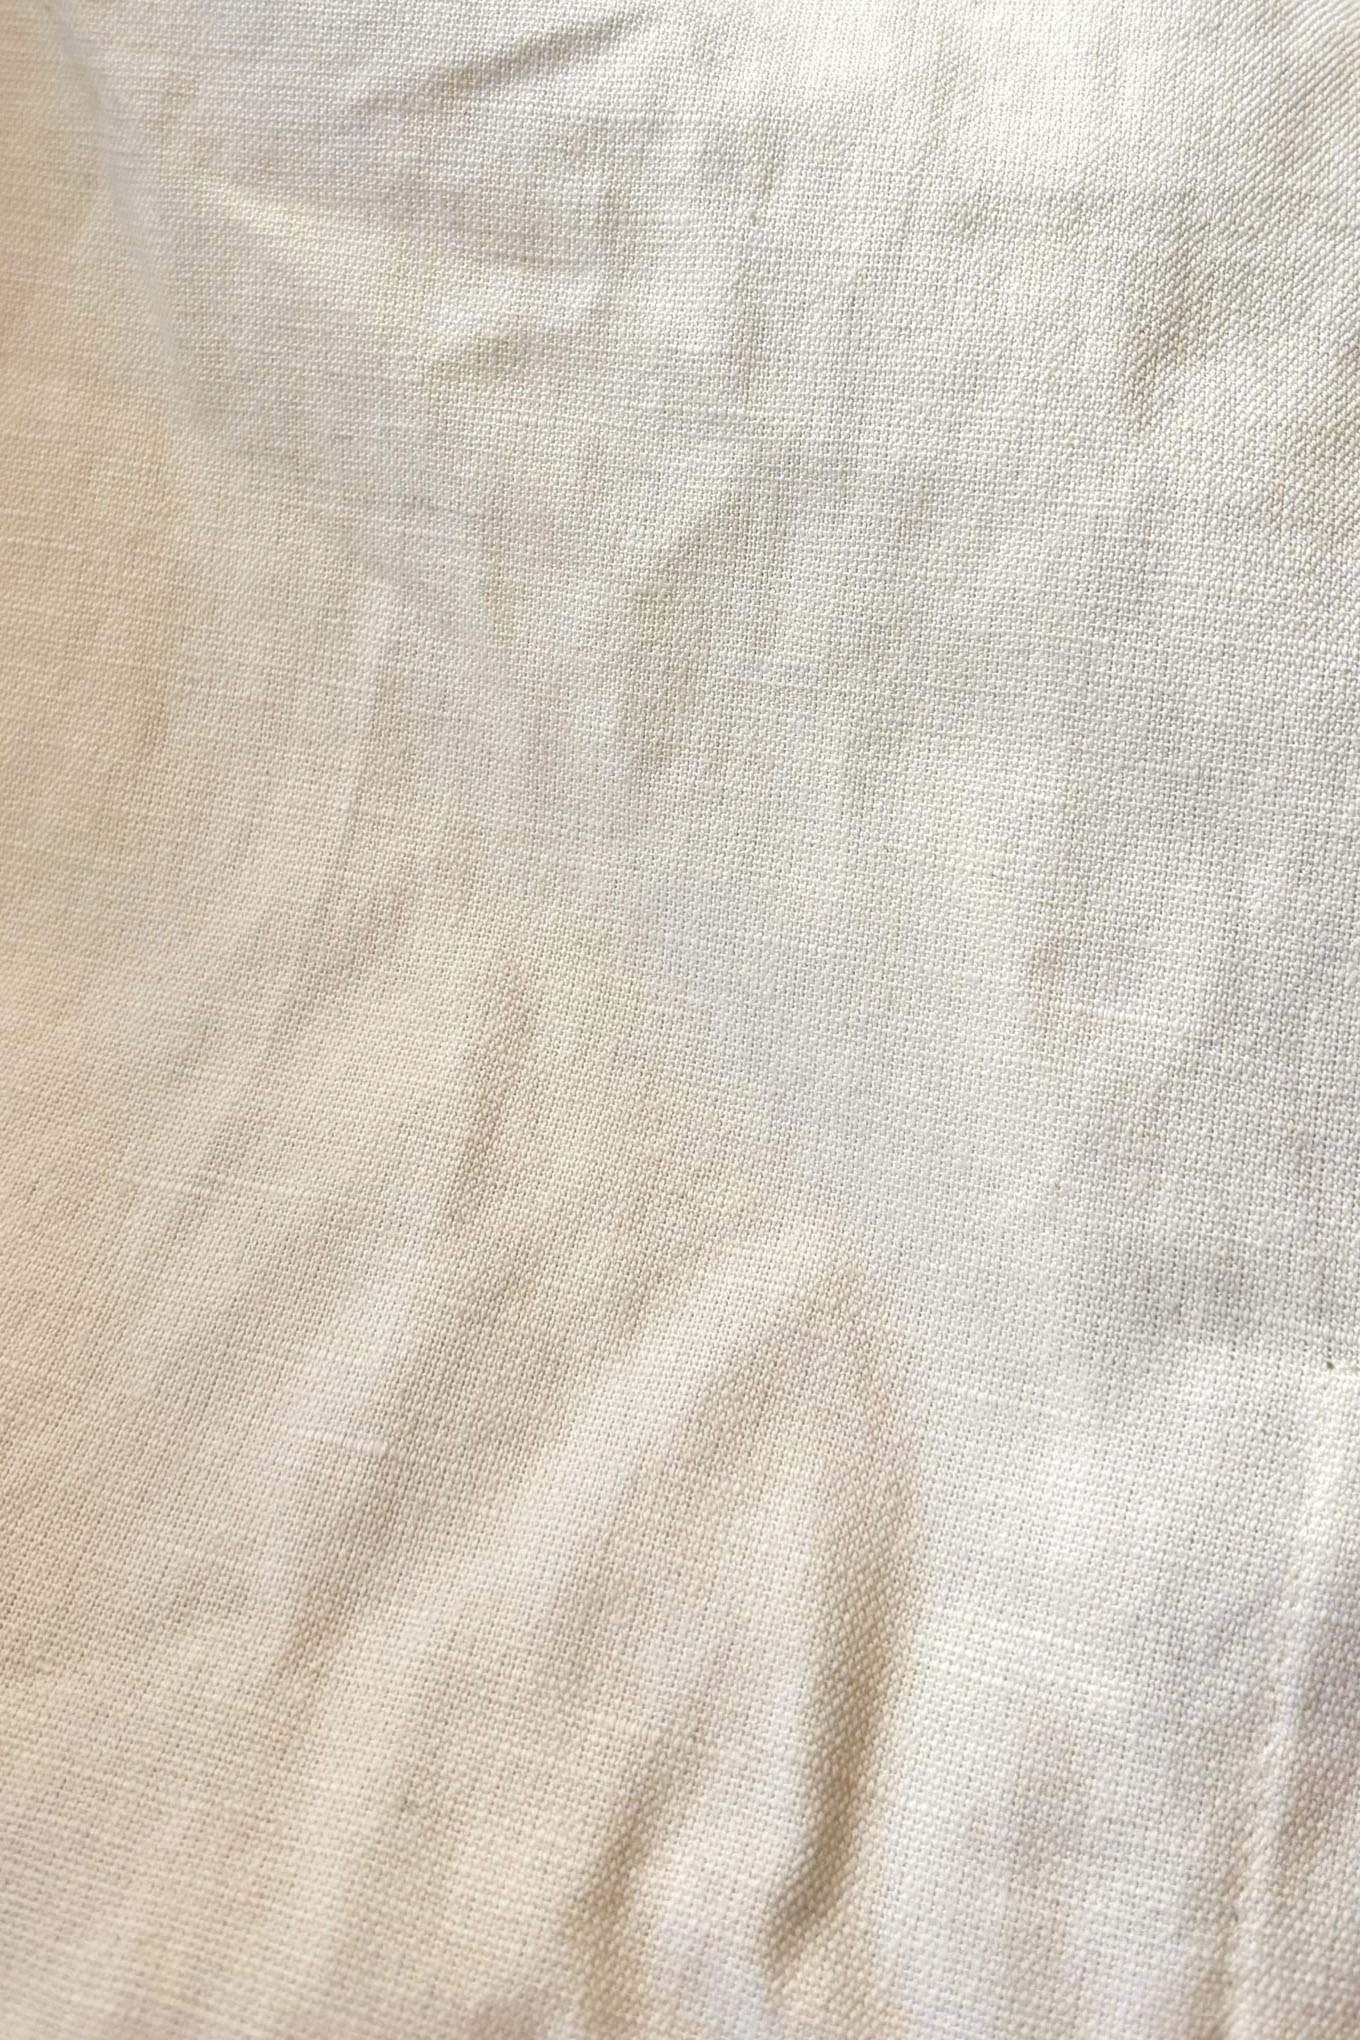 White Shirt & Ivory Skort Set